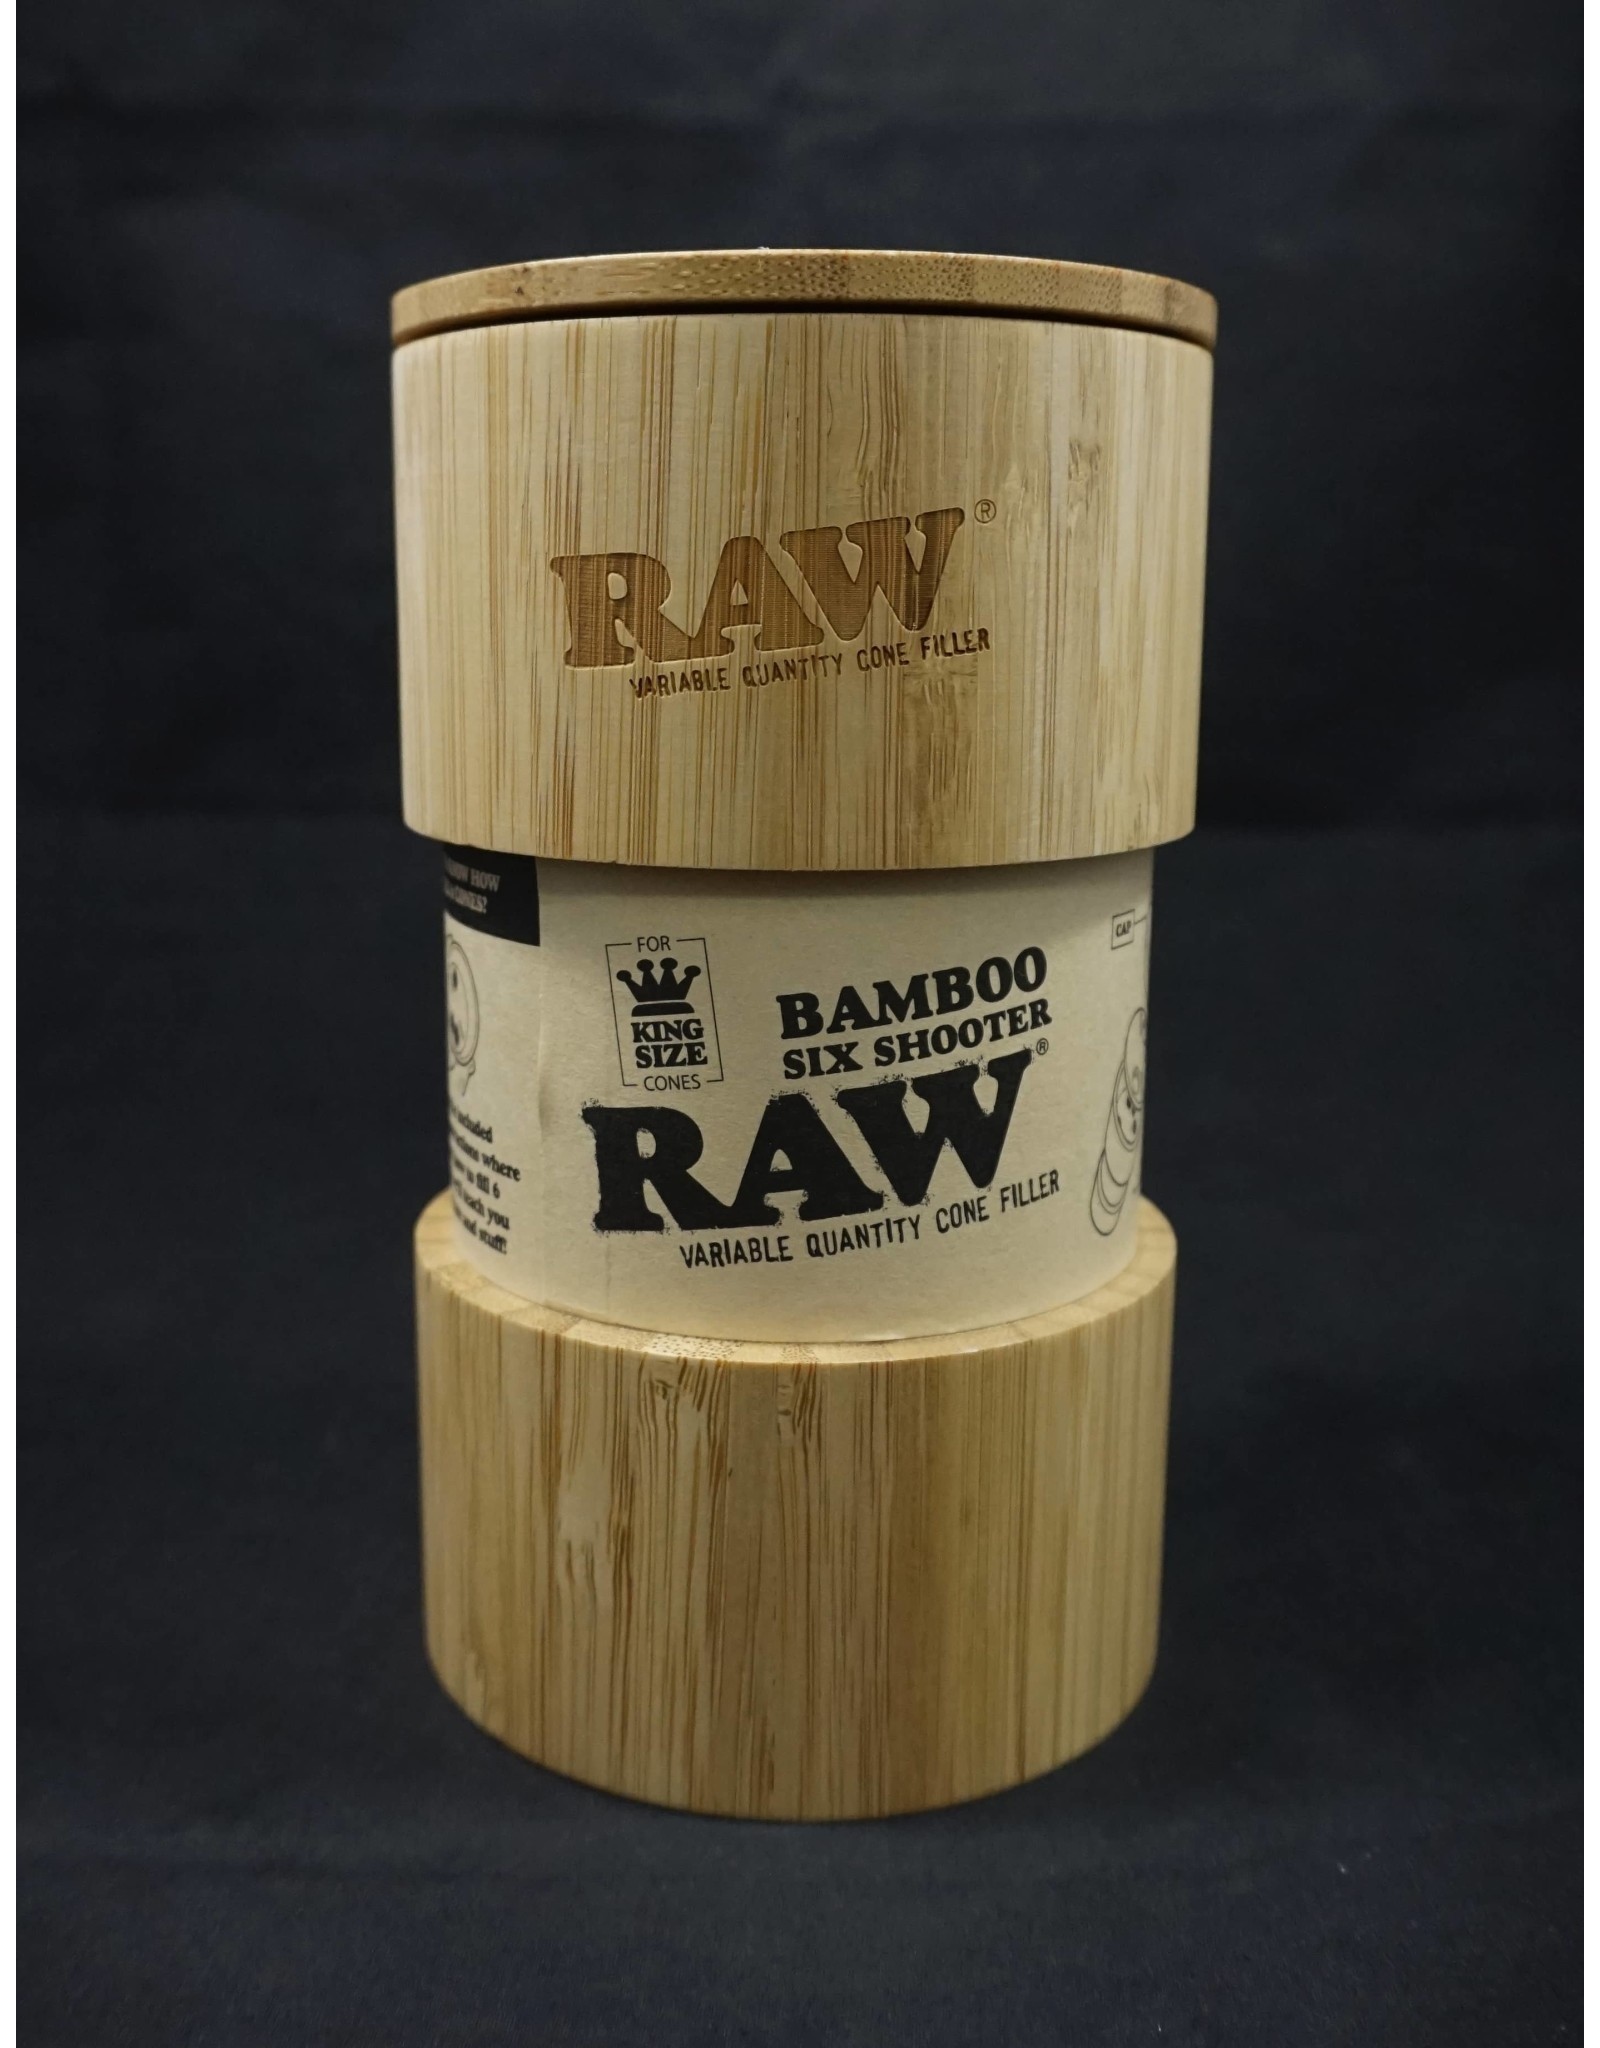 Raw Raw Bamboo Six Shooter - Kingsize